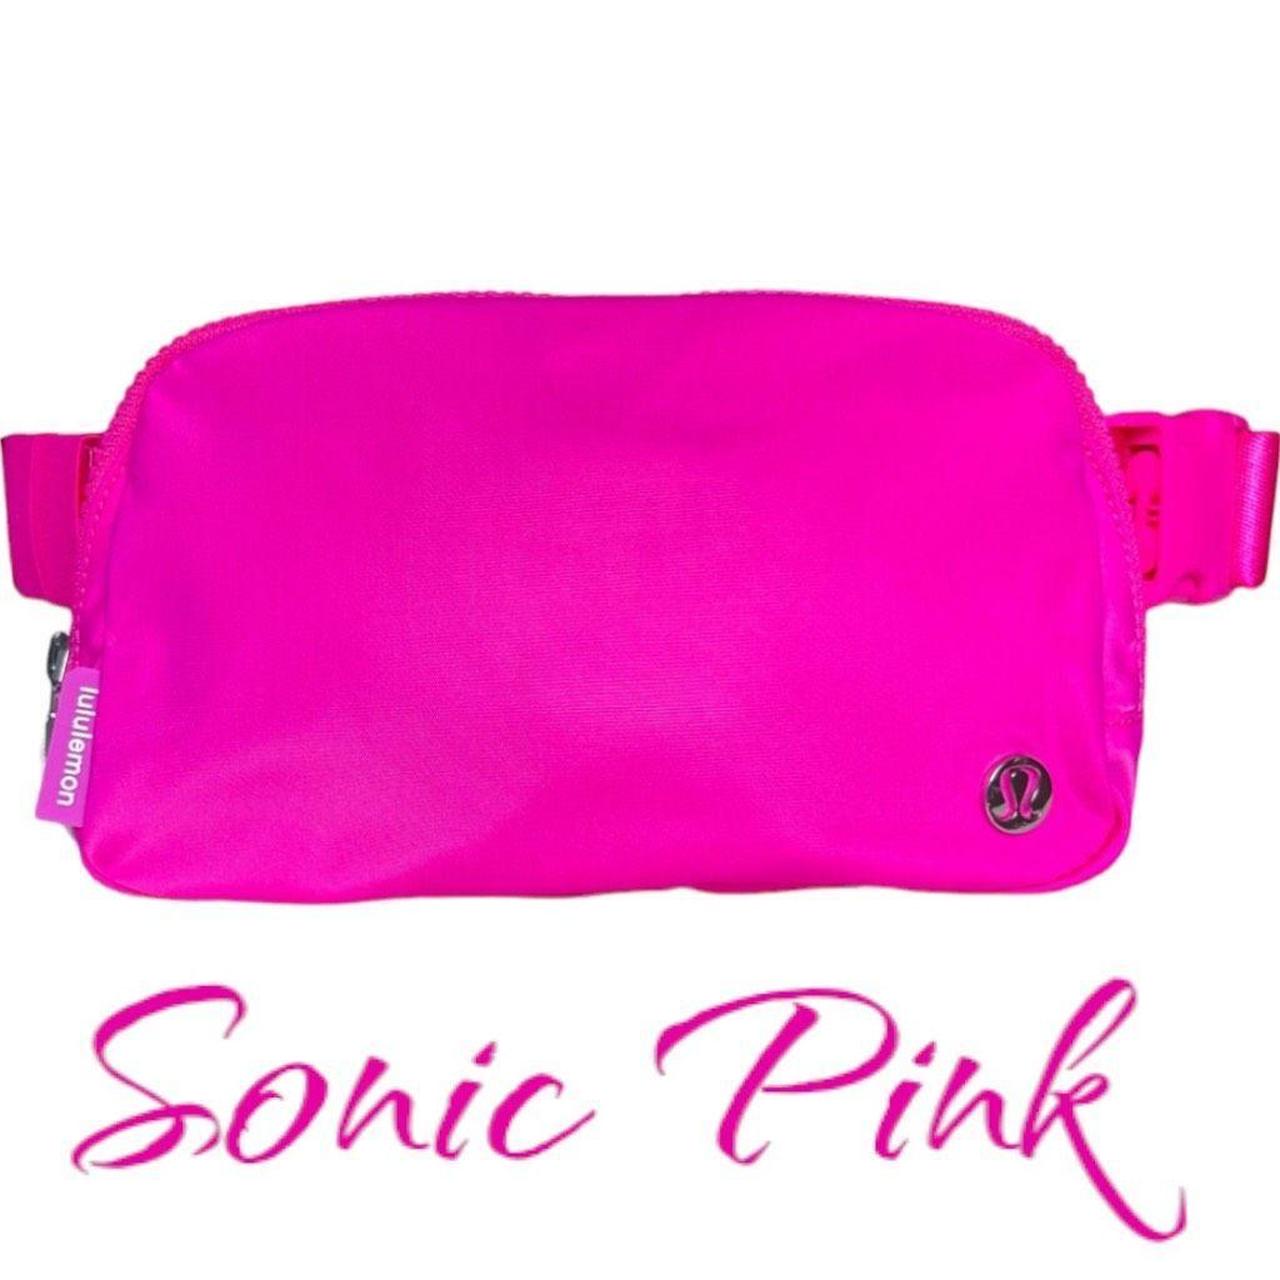 LULULEMON Everywhere Belt Bag in Hot Sonic Pink 🩷 - Depop